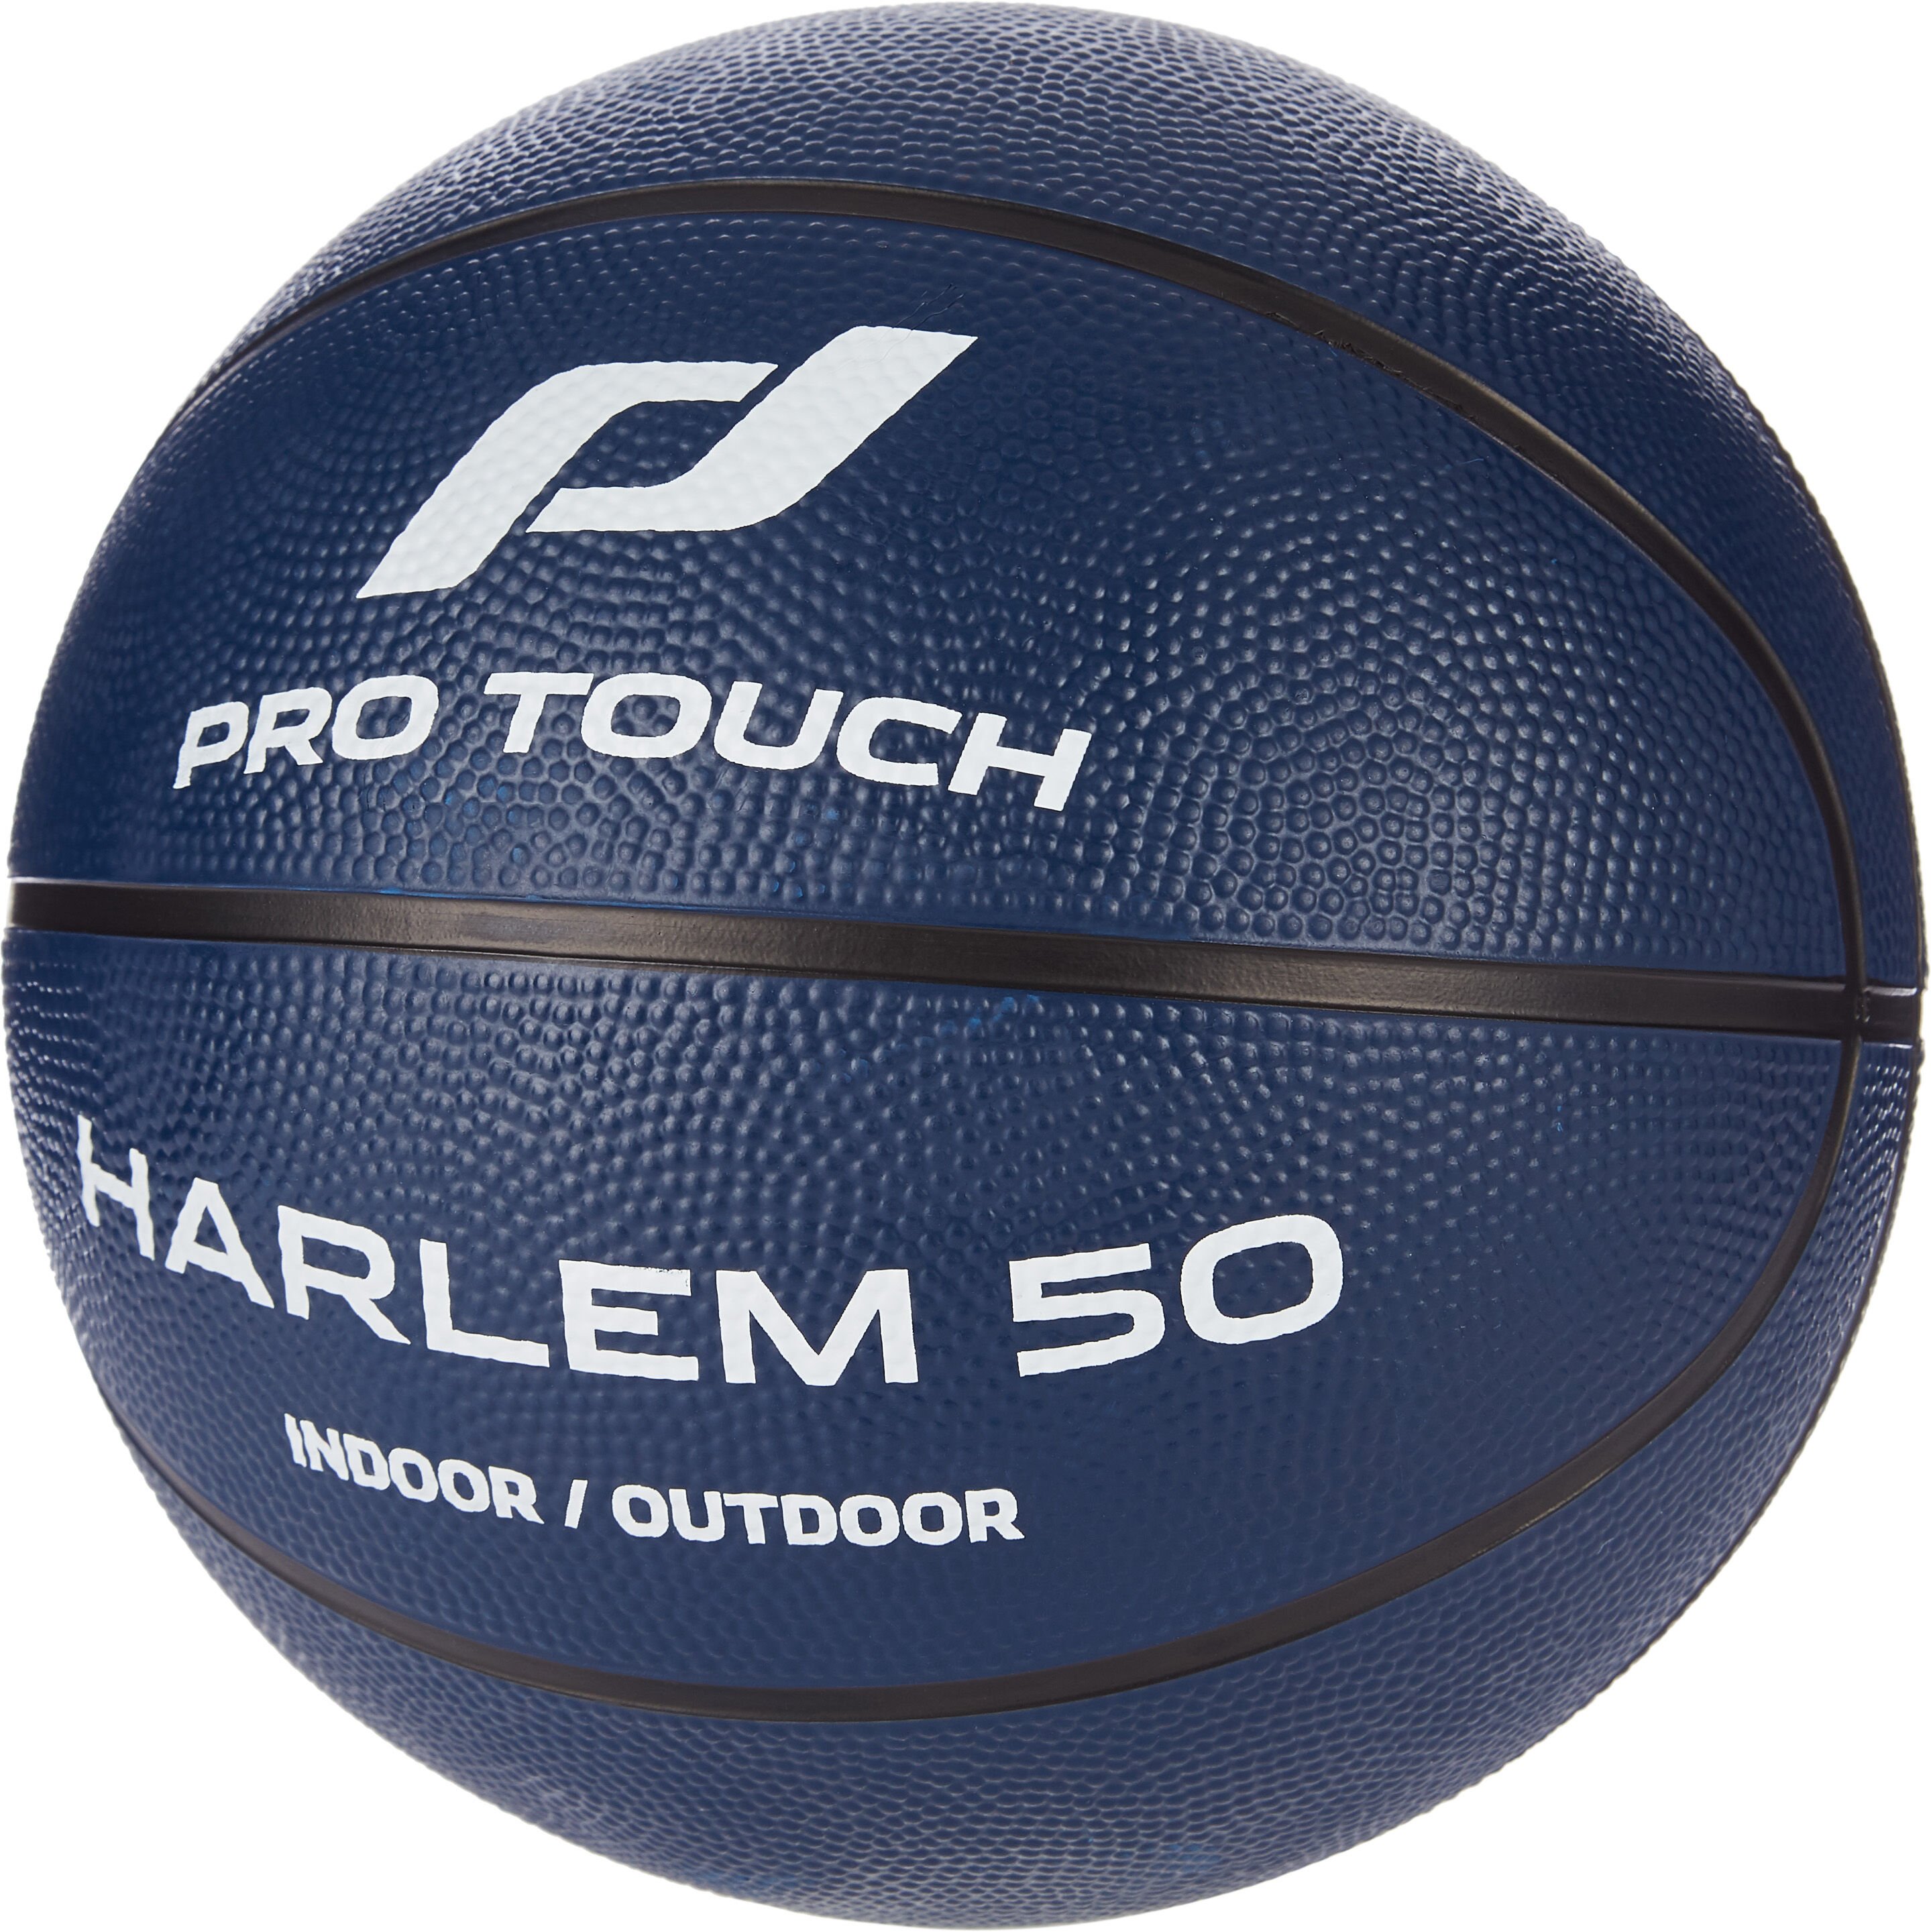 Pro Touch Harlem 50